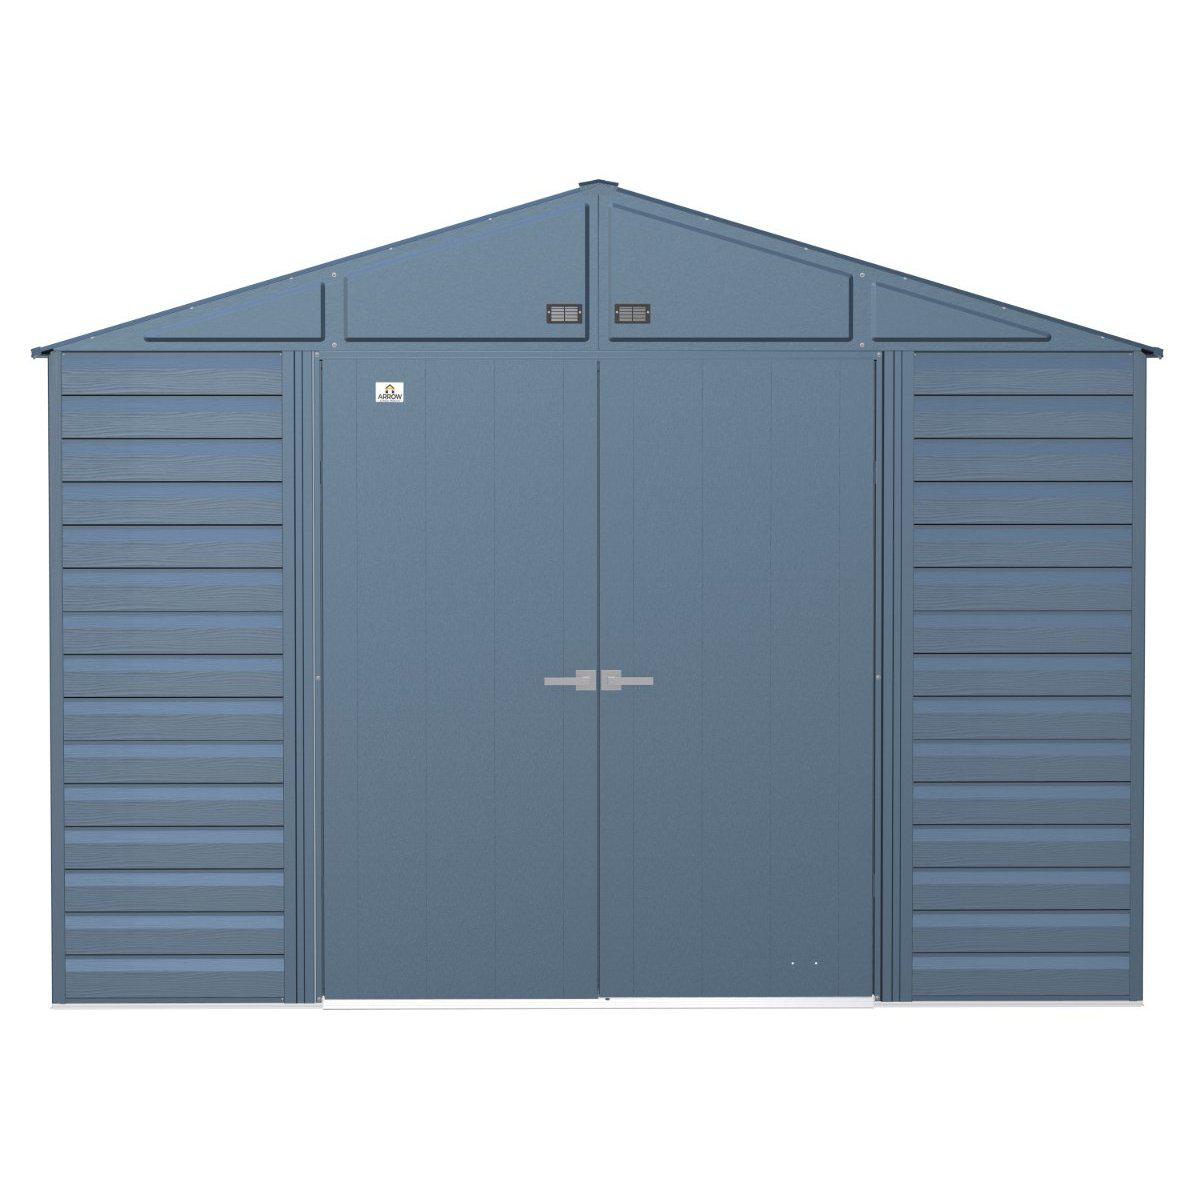 Arrow Select Steel Storage Shed 10 x 14 ft. - Delightful Yard